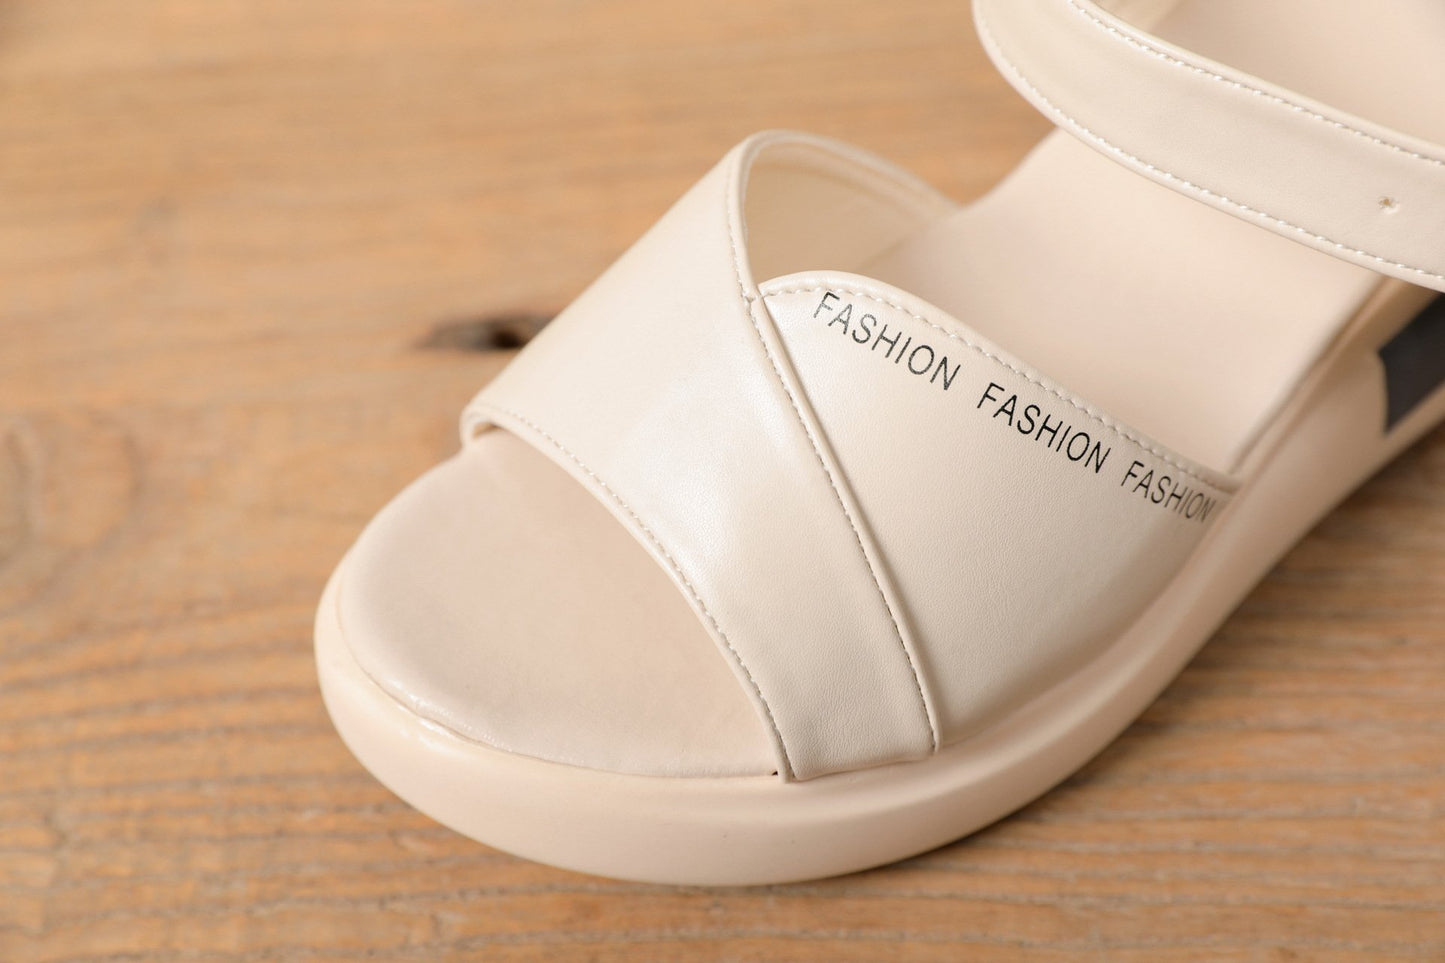 Classic Slope heel Causal Open Toe Sandals